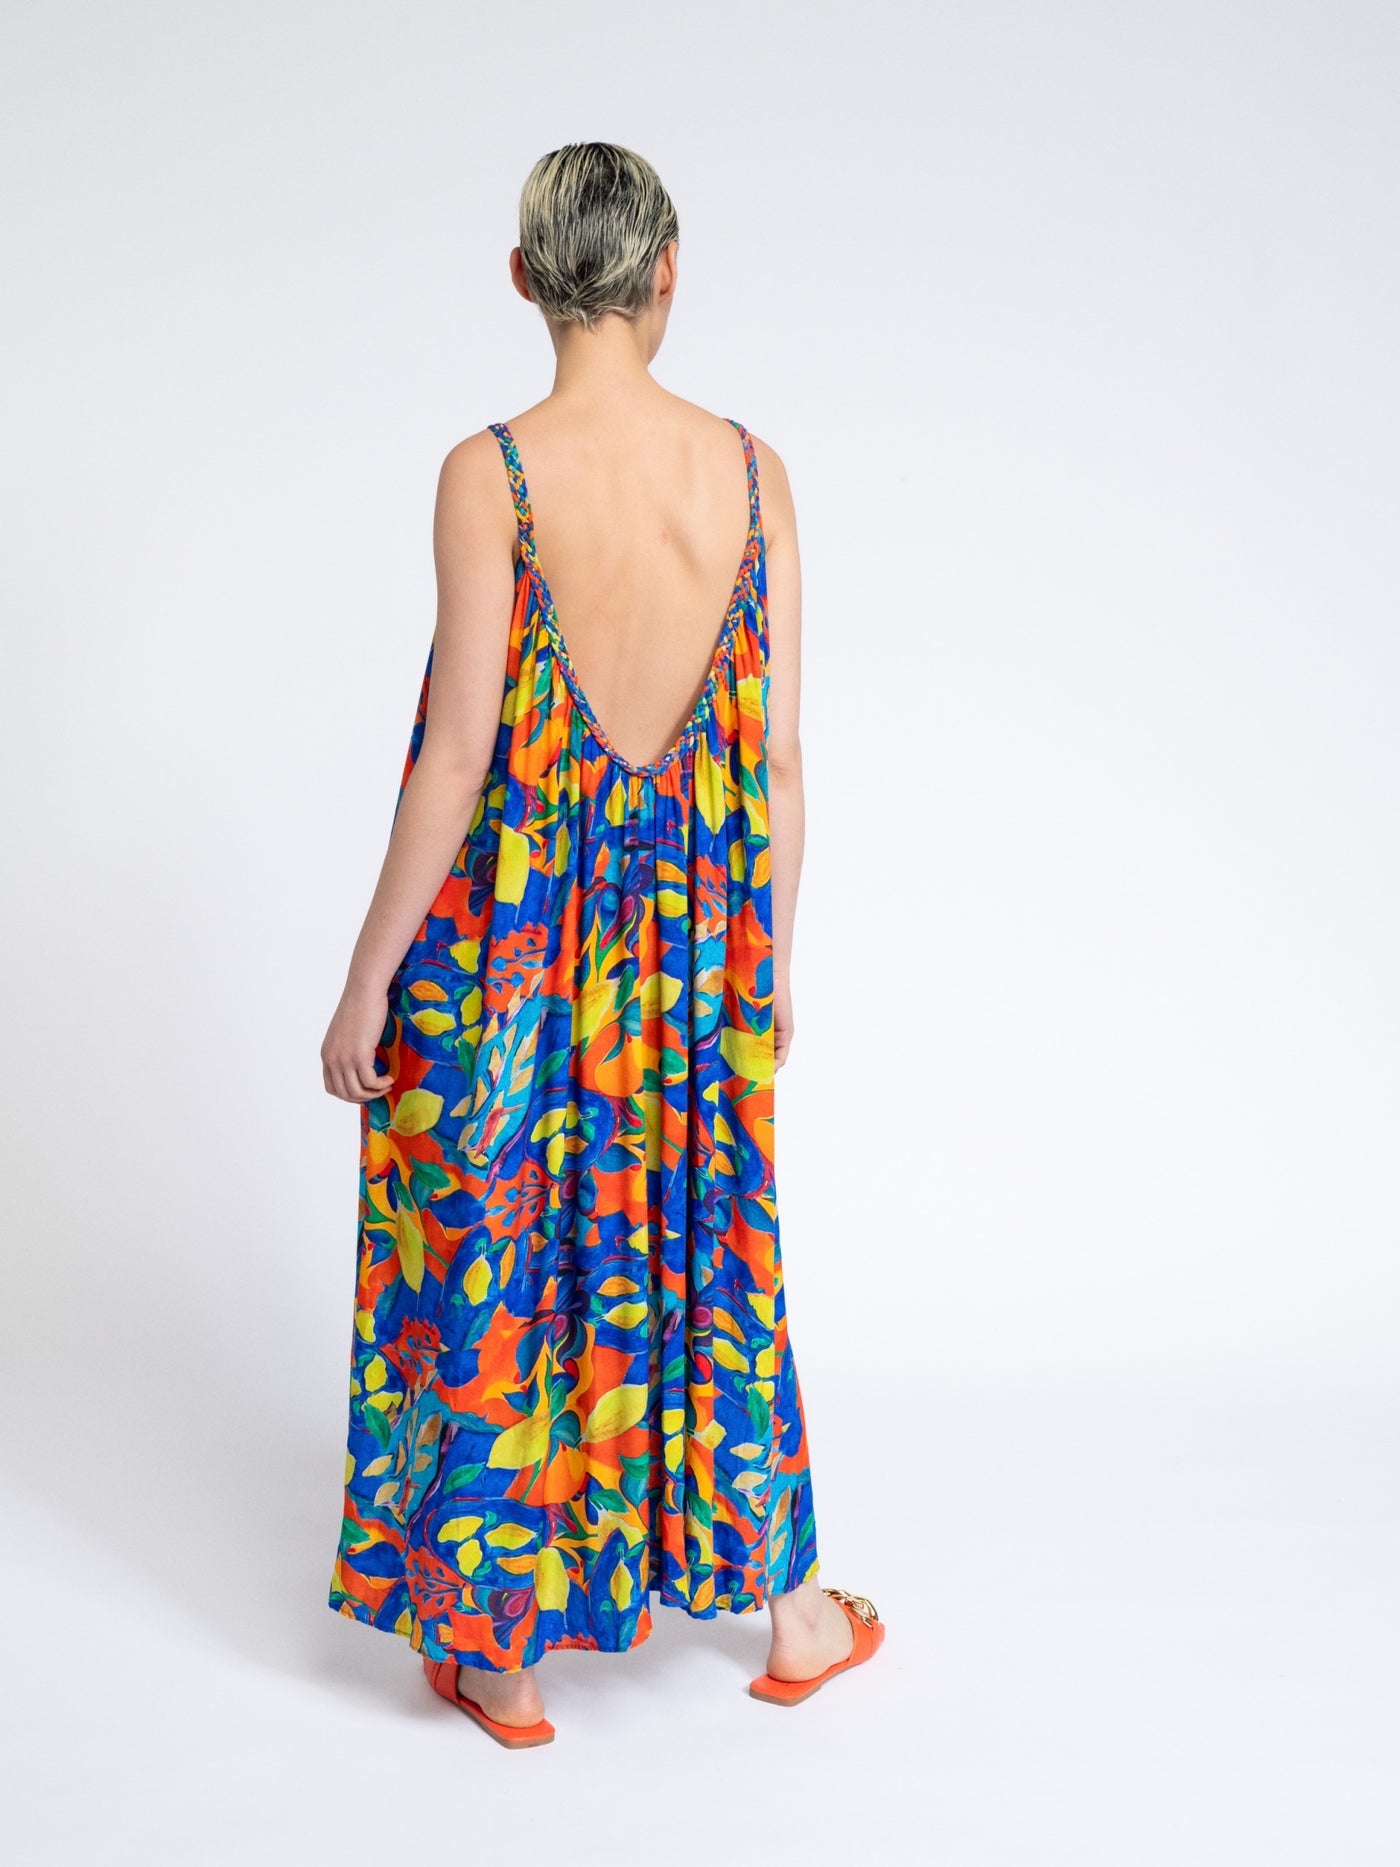 Tropical print flowy dress